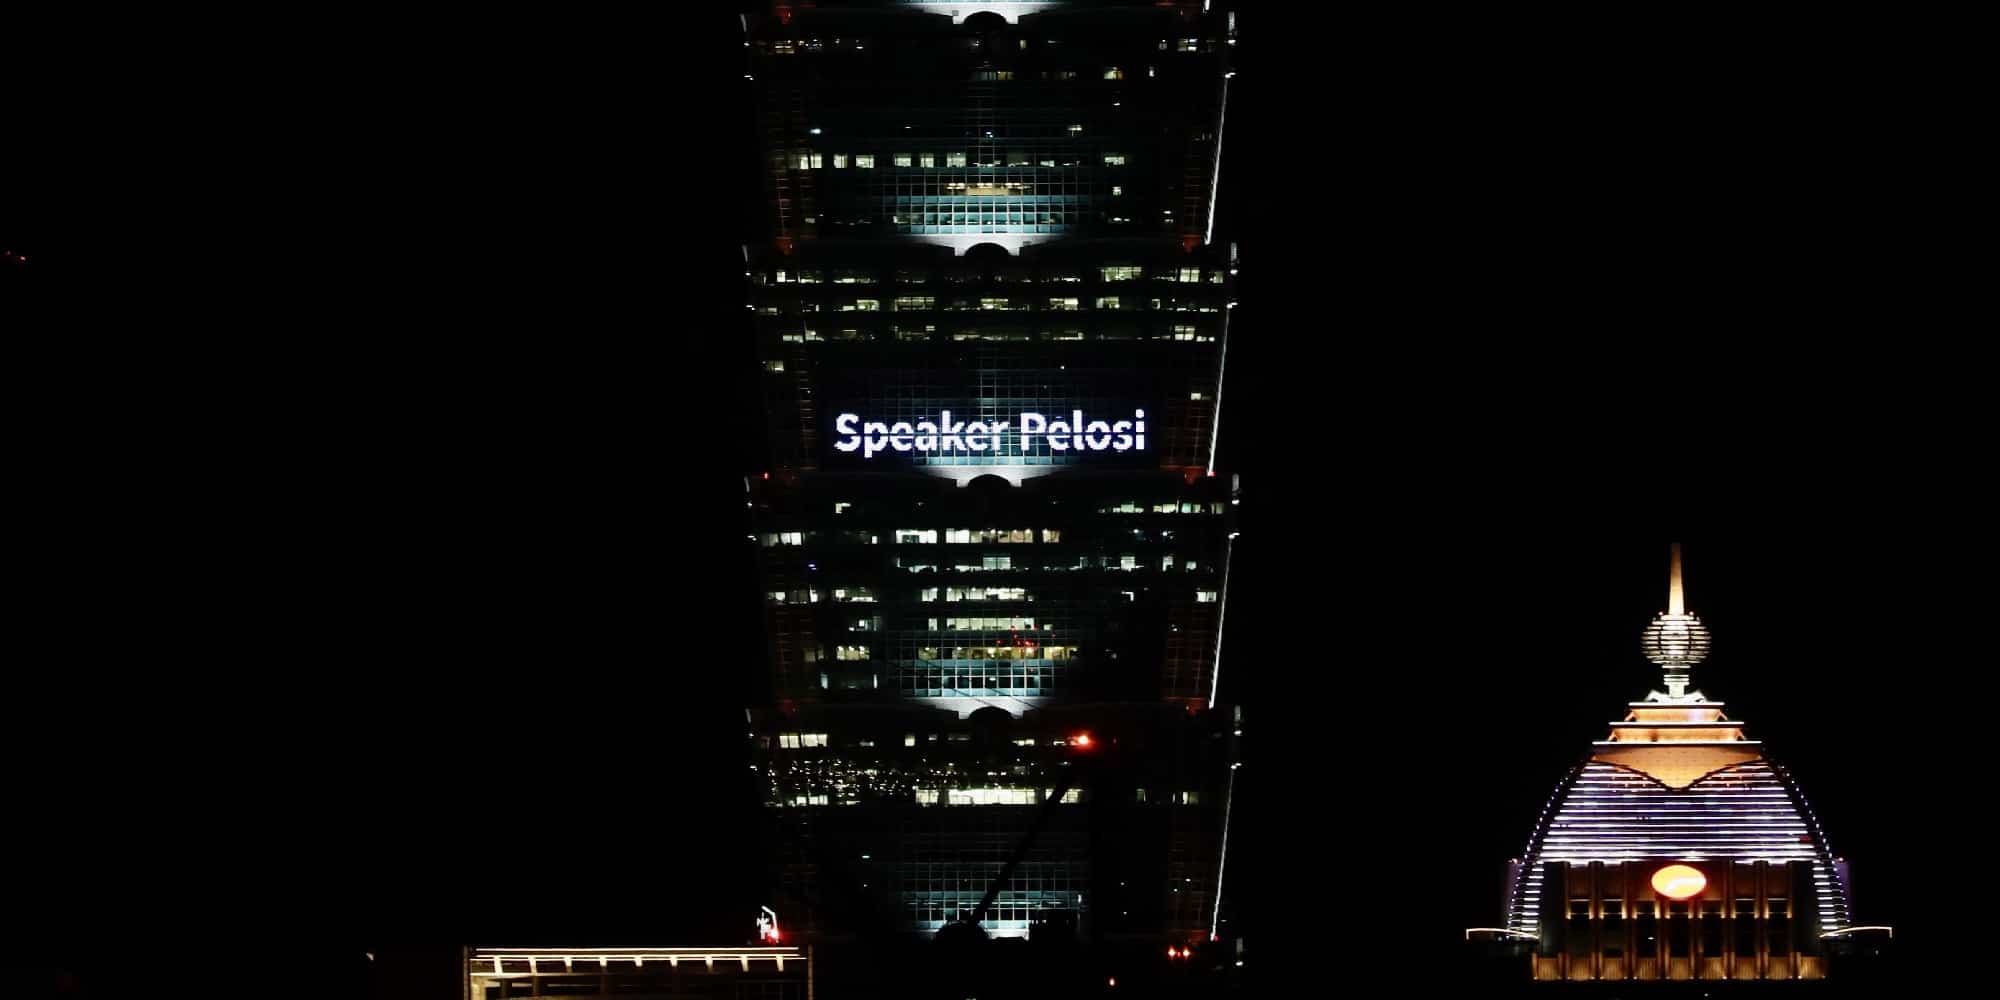 H Tαϊβάν υποδέχεται την Νάνσυ Πελόζι, φωτισμένος ουρανοξύστης την υποδέχεται